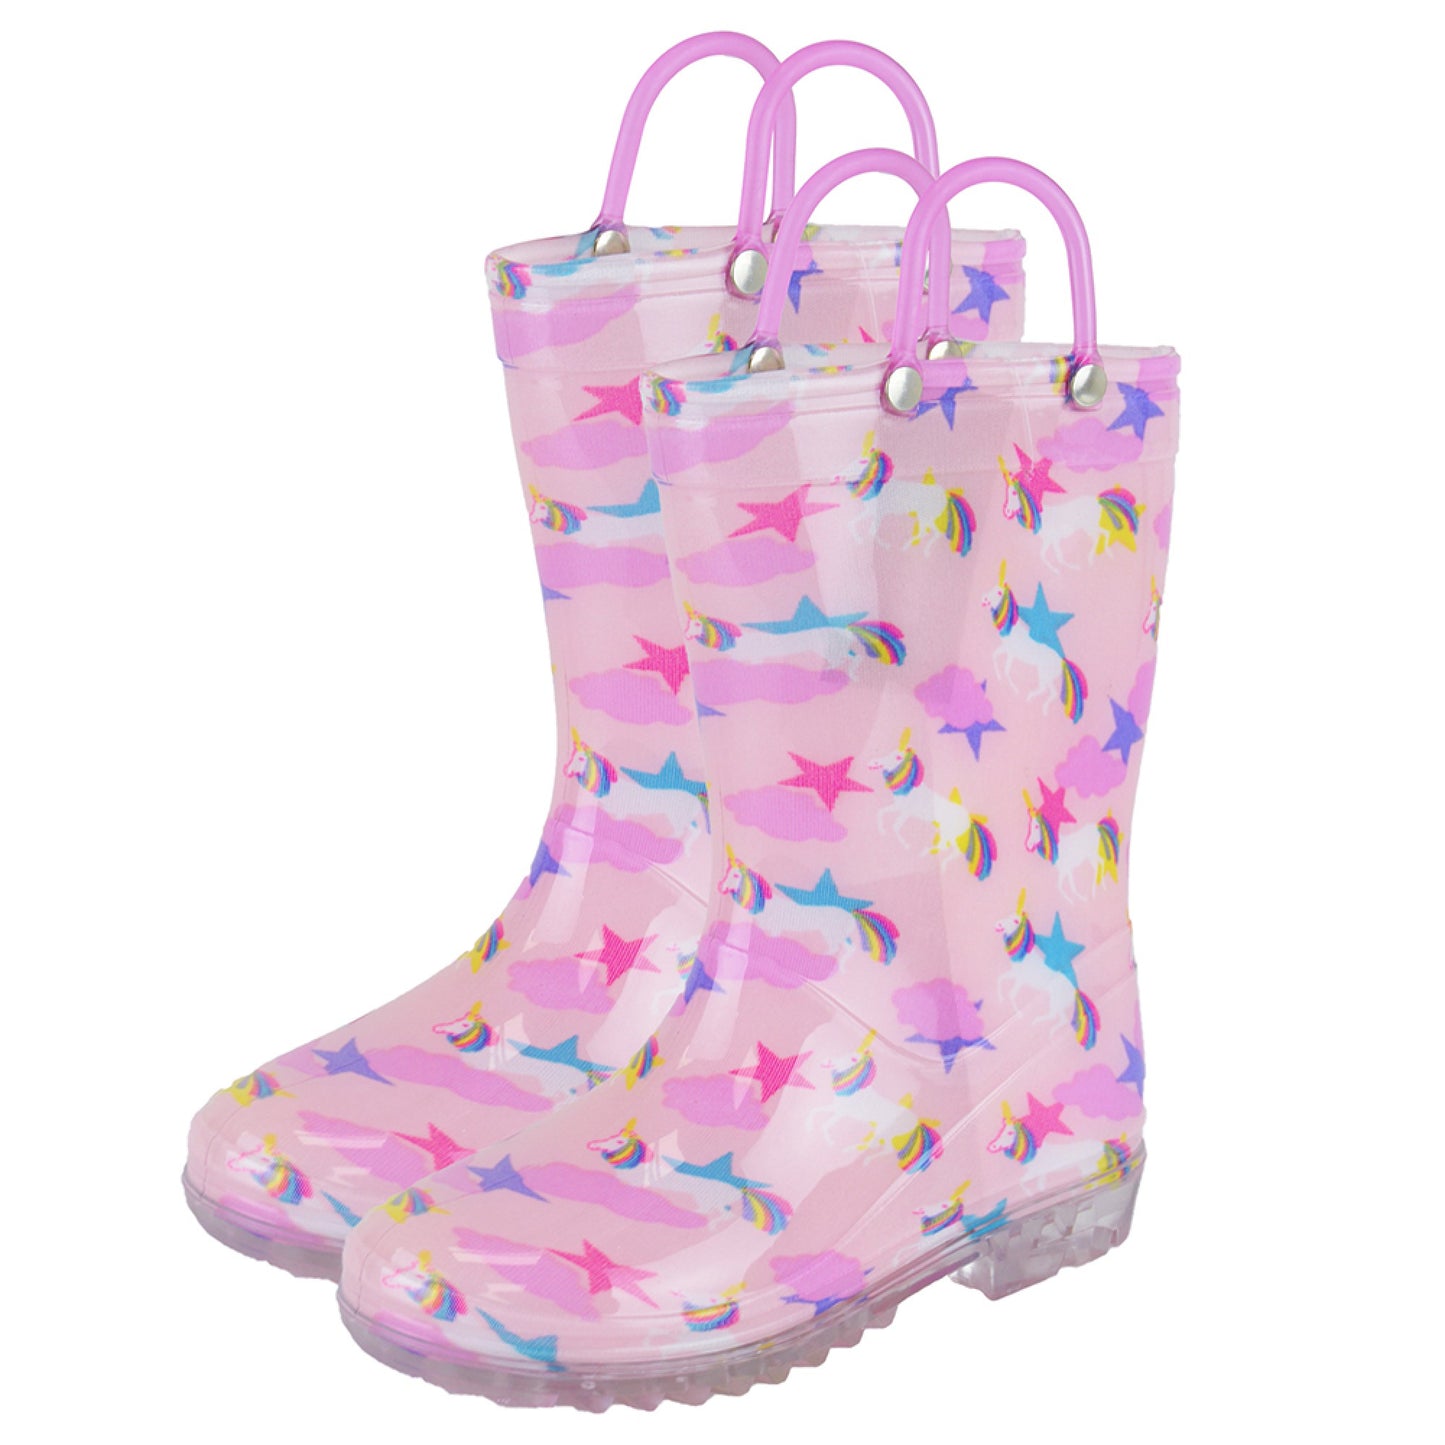 Girls Pink Unicorn Wellies Wellington Rain Boots with Pull On Handles